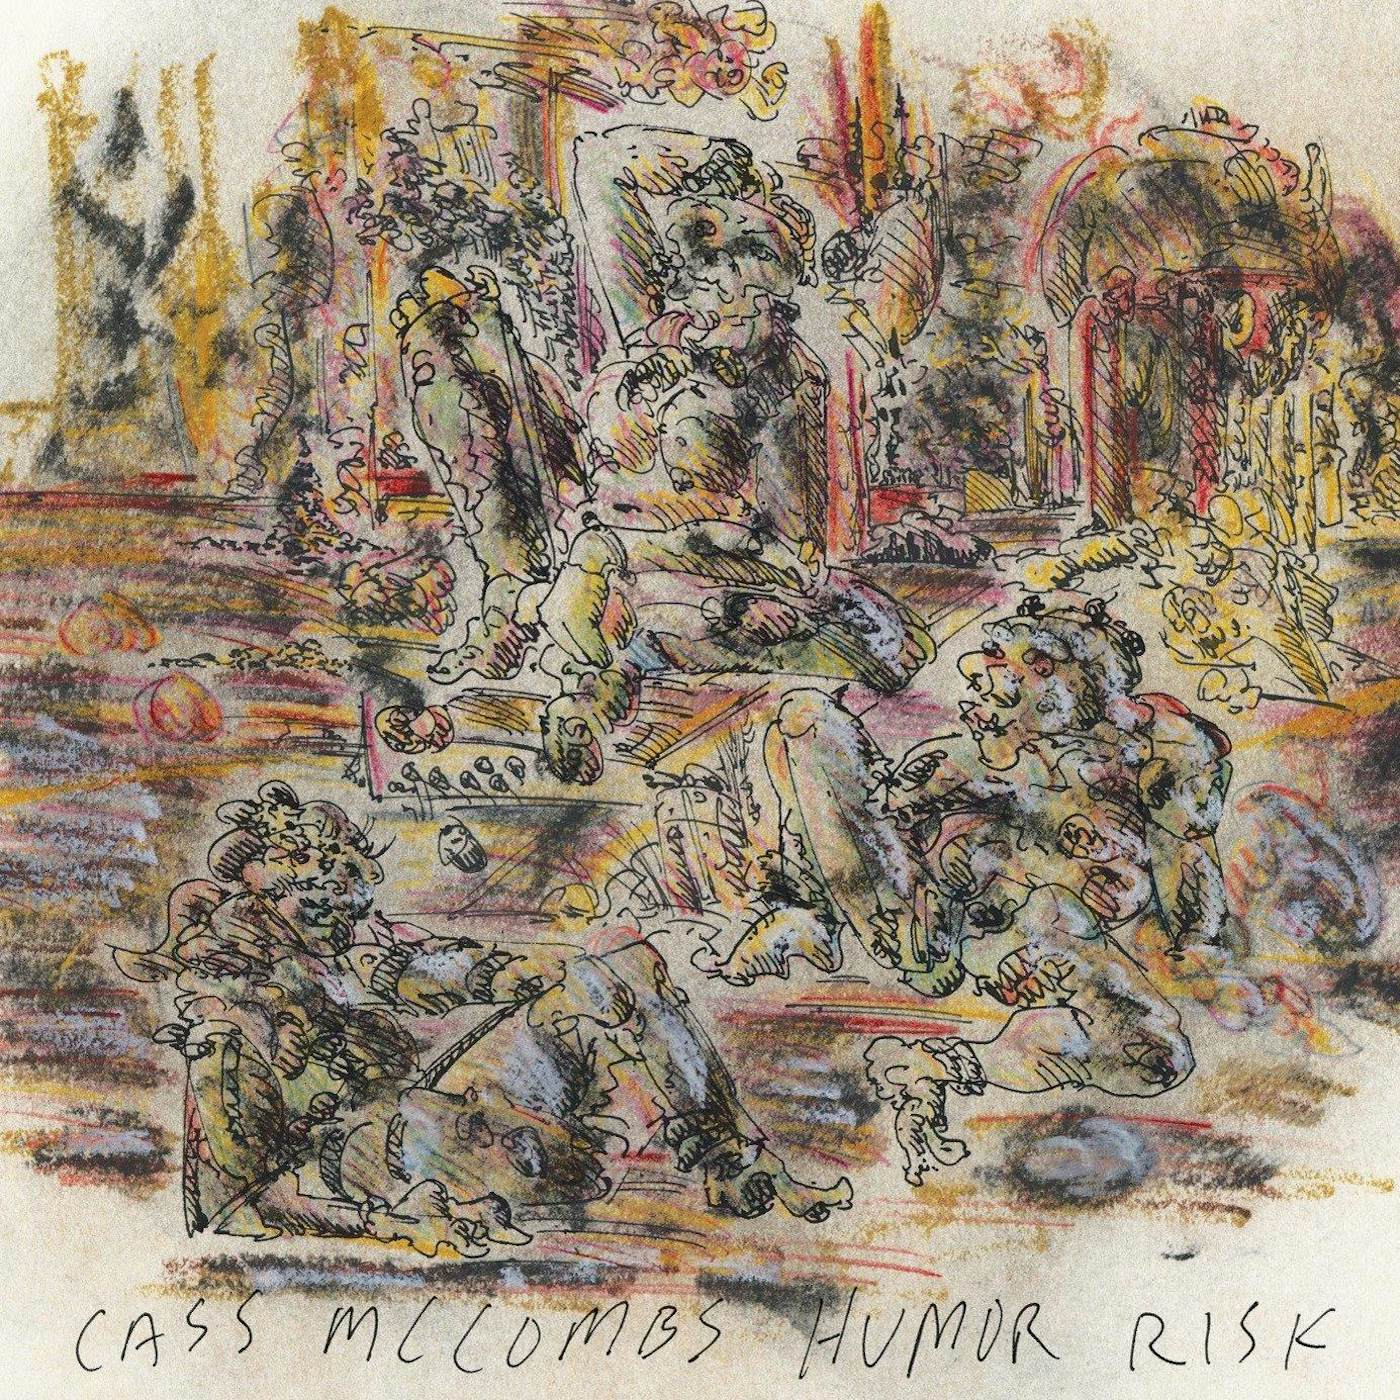 Cass McCombs Humor Risk (DL Card) Vinyl Record